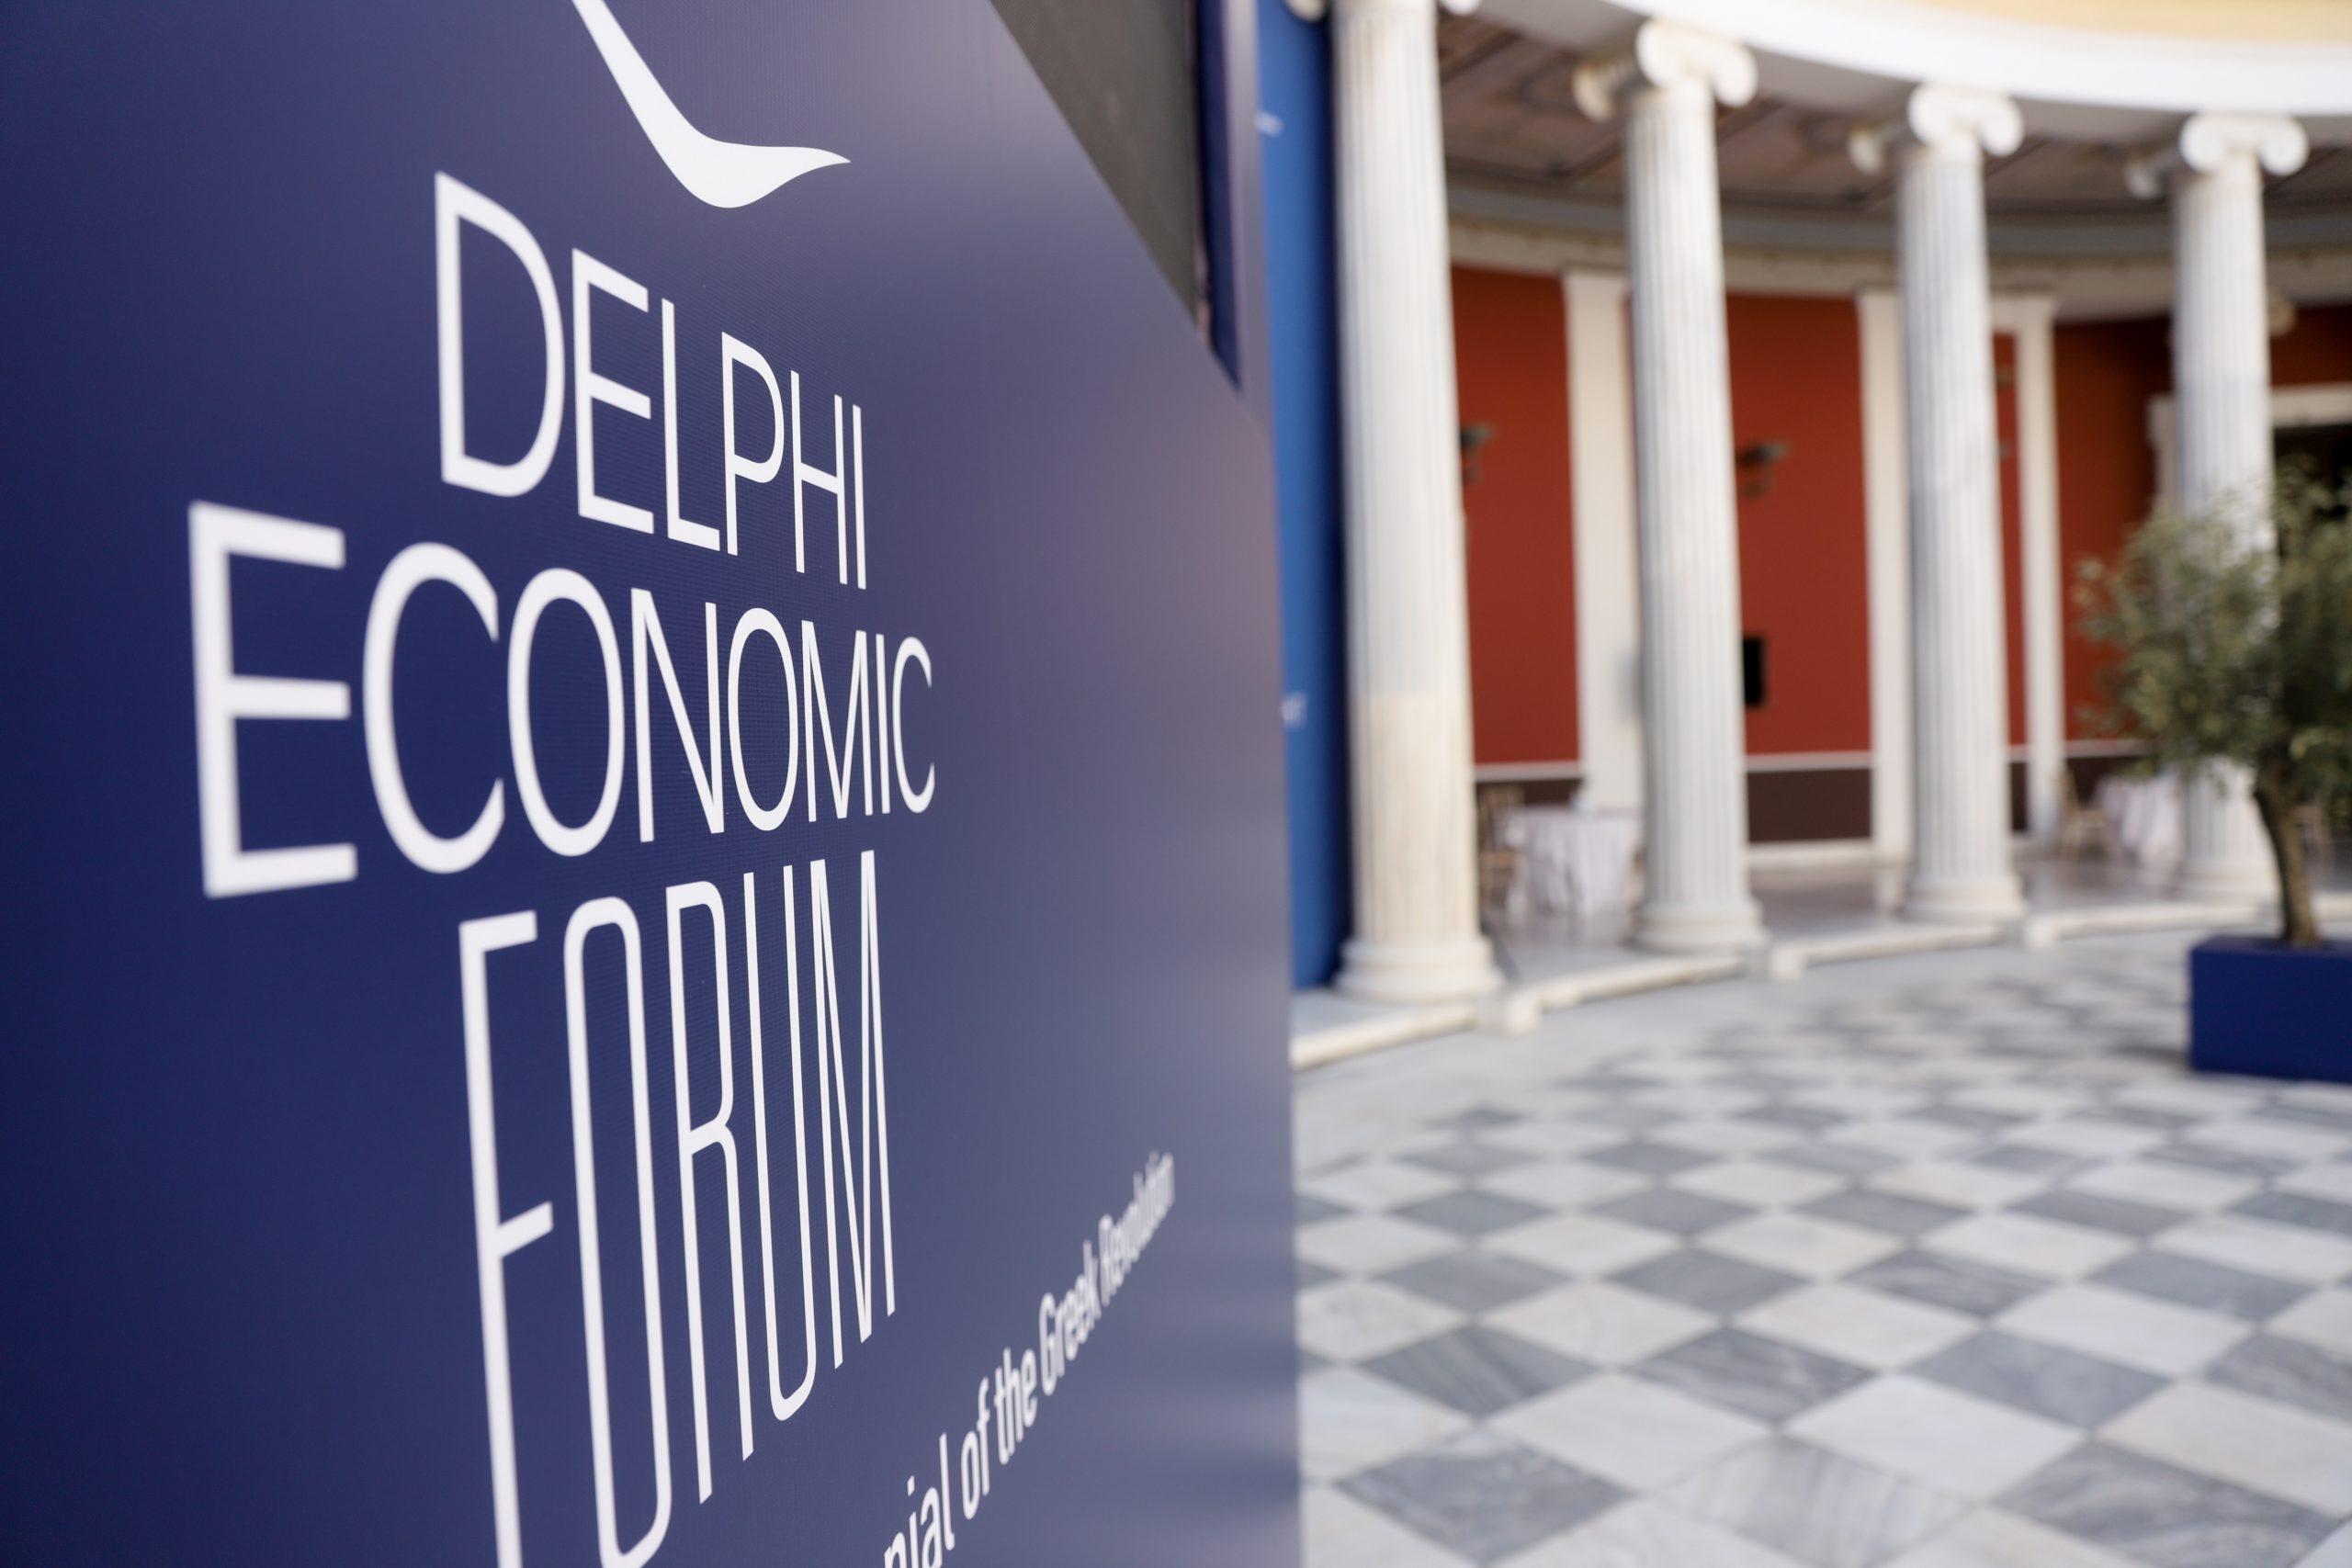 Delphi Forum: Ο ψηφιακός μετασχηματισμός στο επίκεντρο του Ταμείου Ανάκαμψης